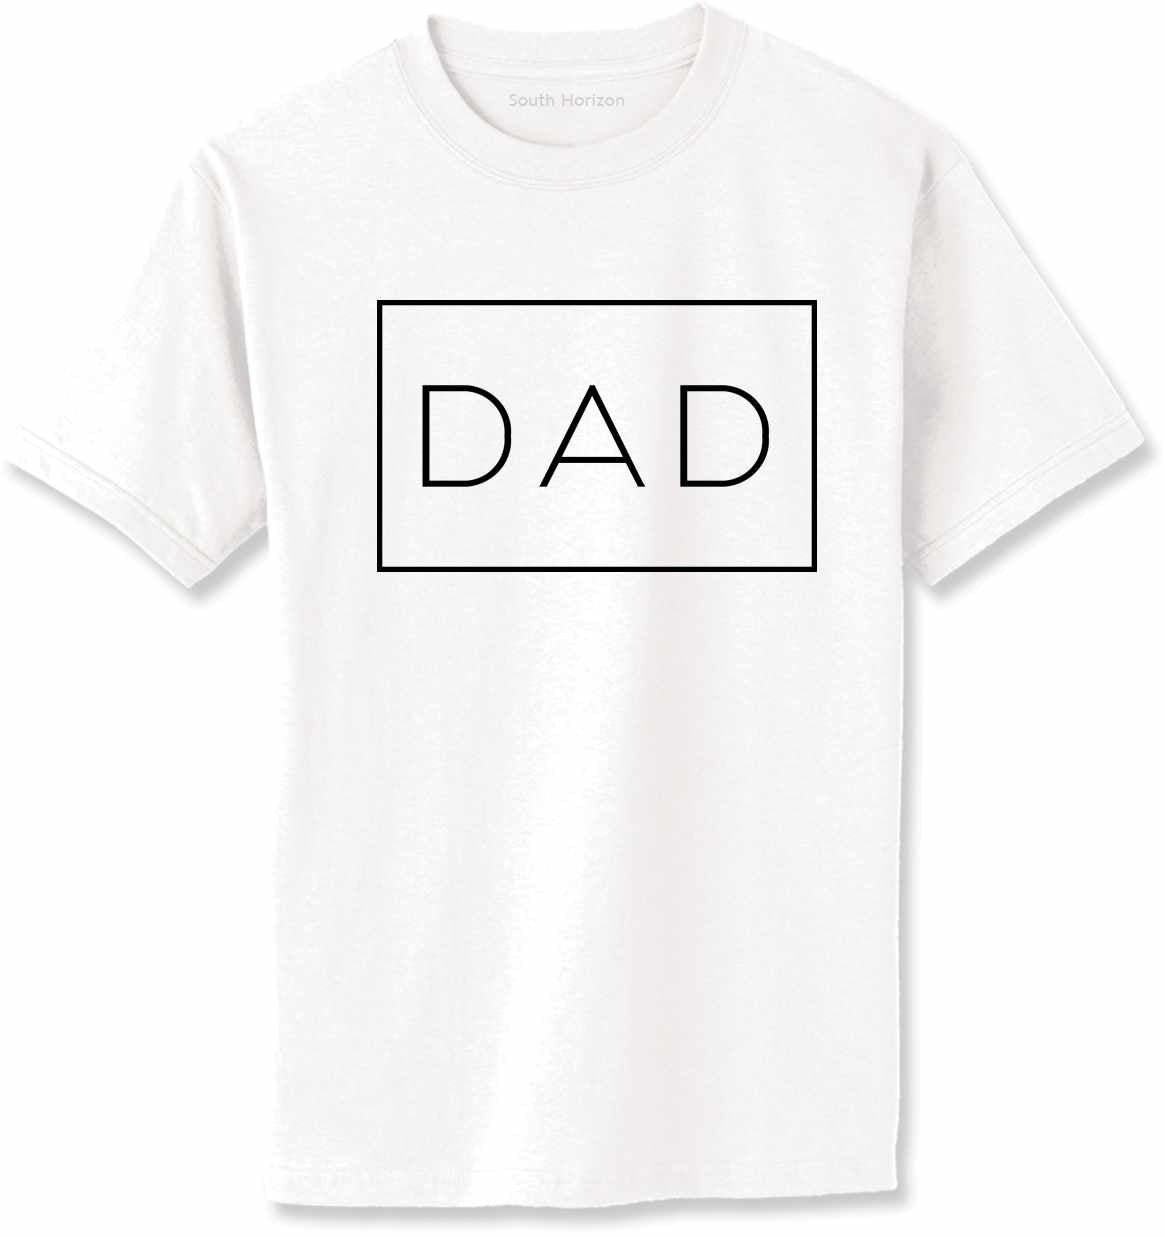 DAD - Daddy - Box on Adult T-Shirt (#1257-1)